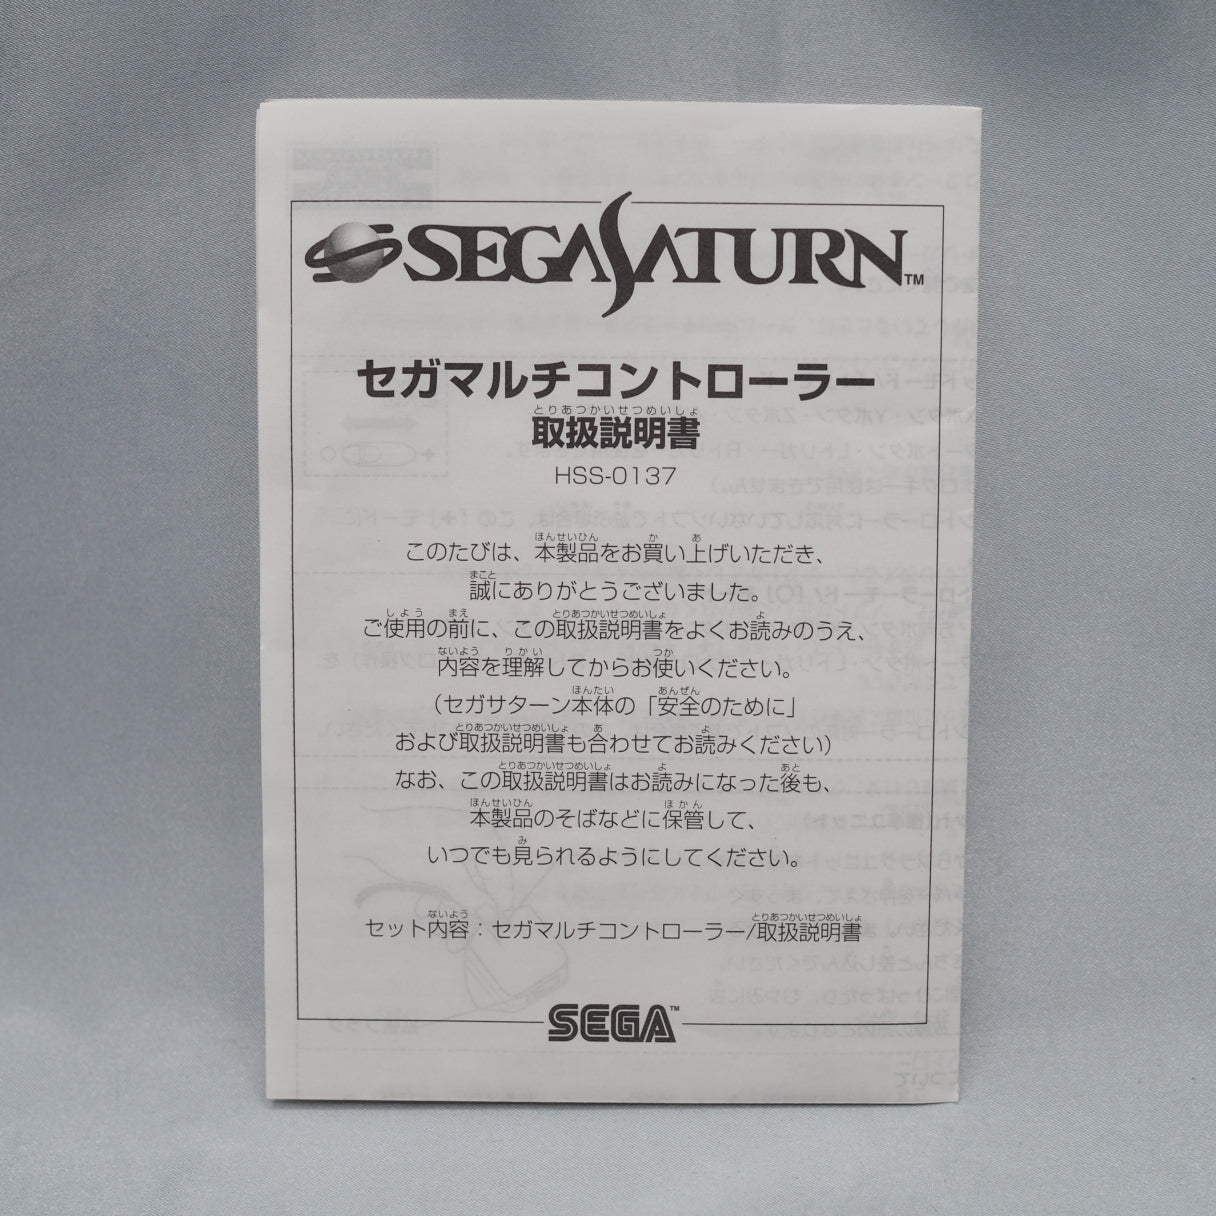 SEGA SATURN 3D Multi Controller HSS-0137 Boxed + Nights SET